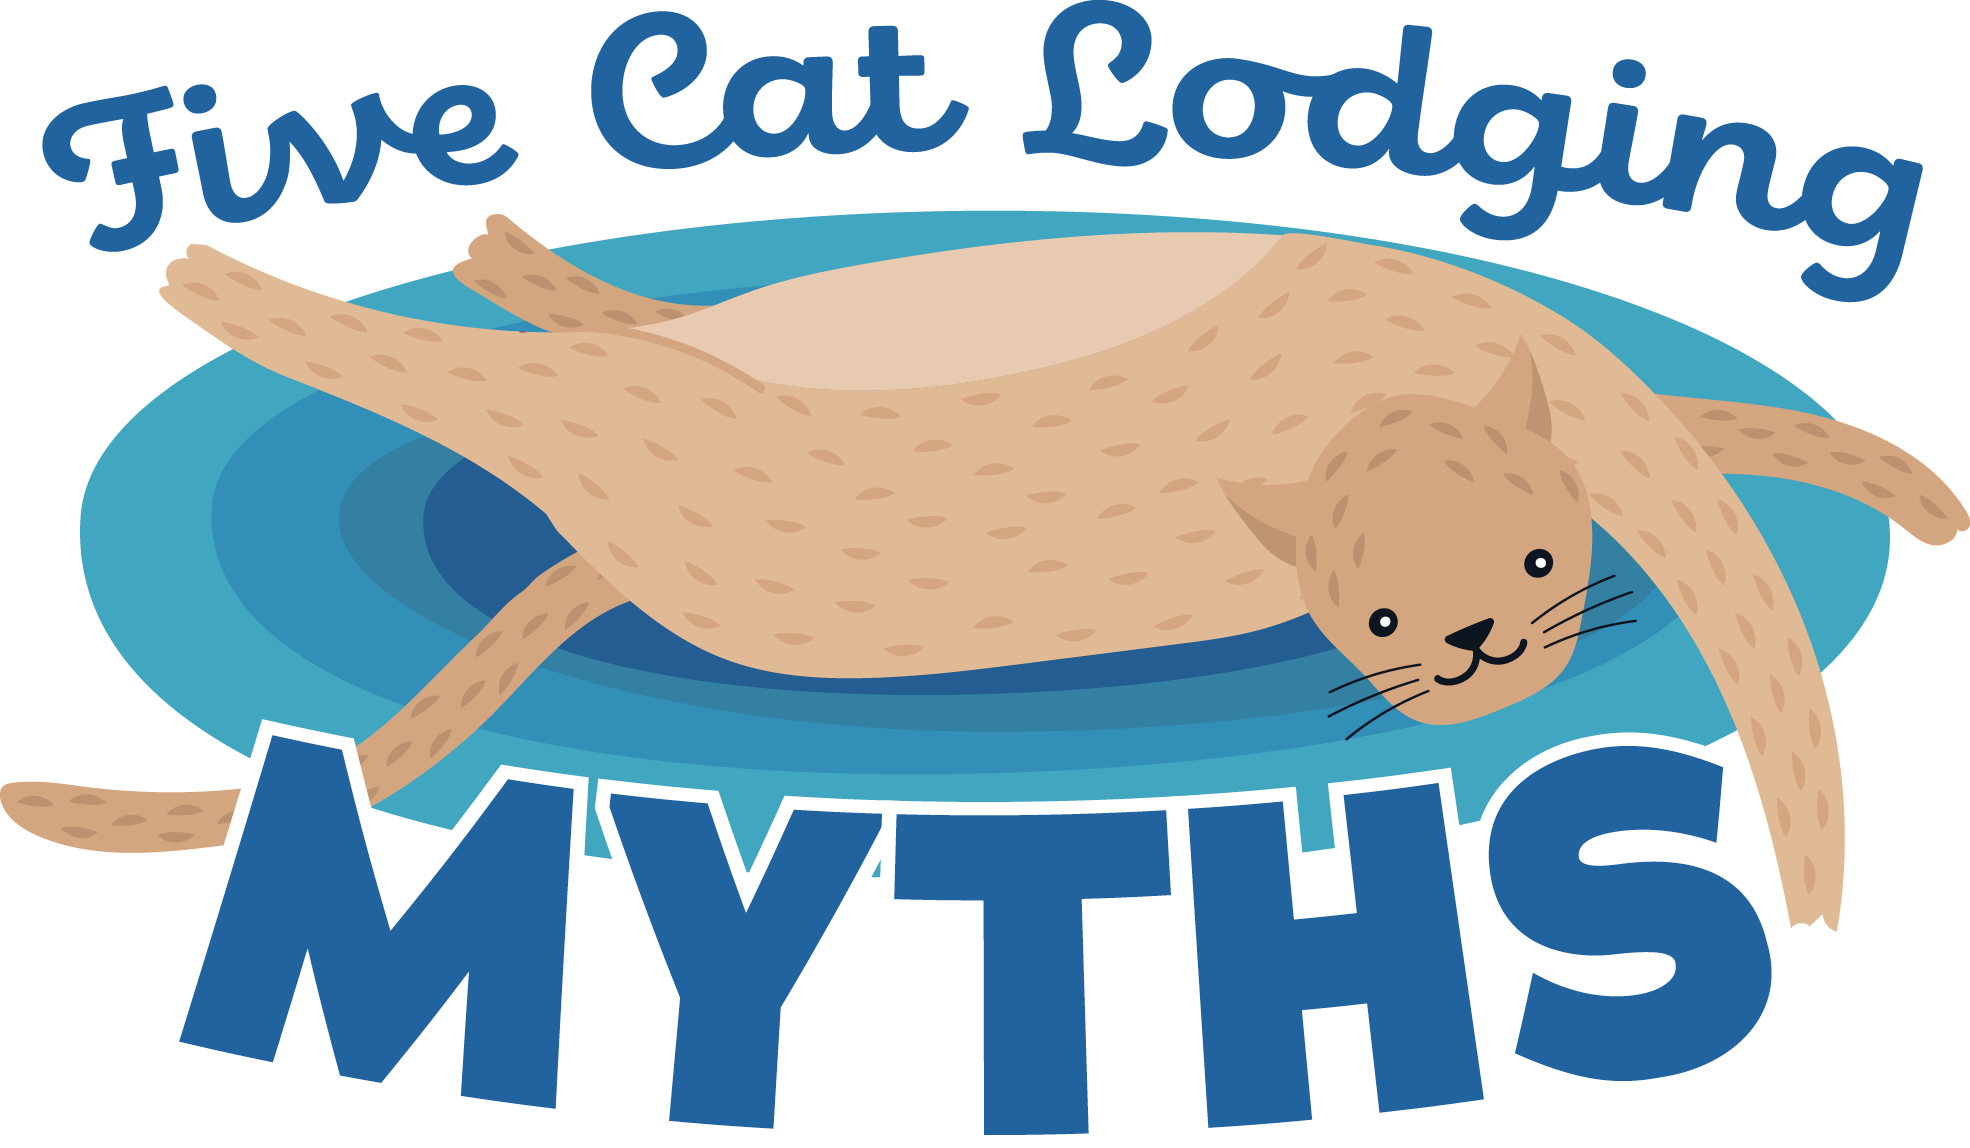 Five Cat Lodging Myths